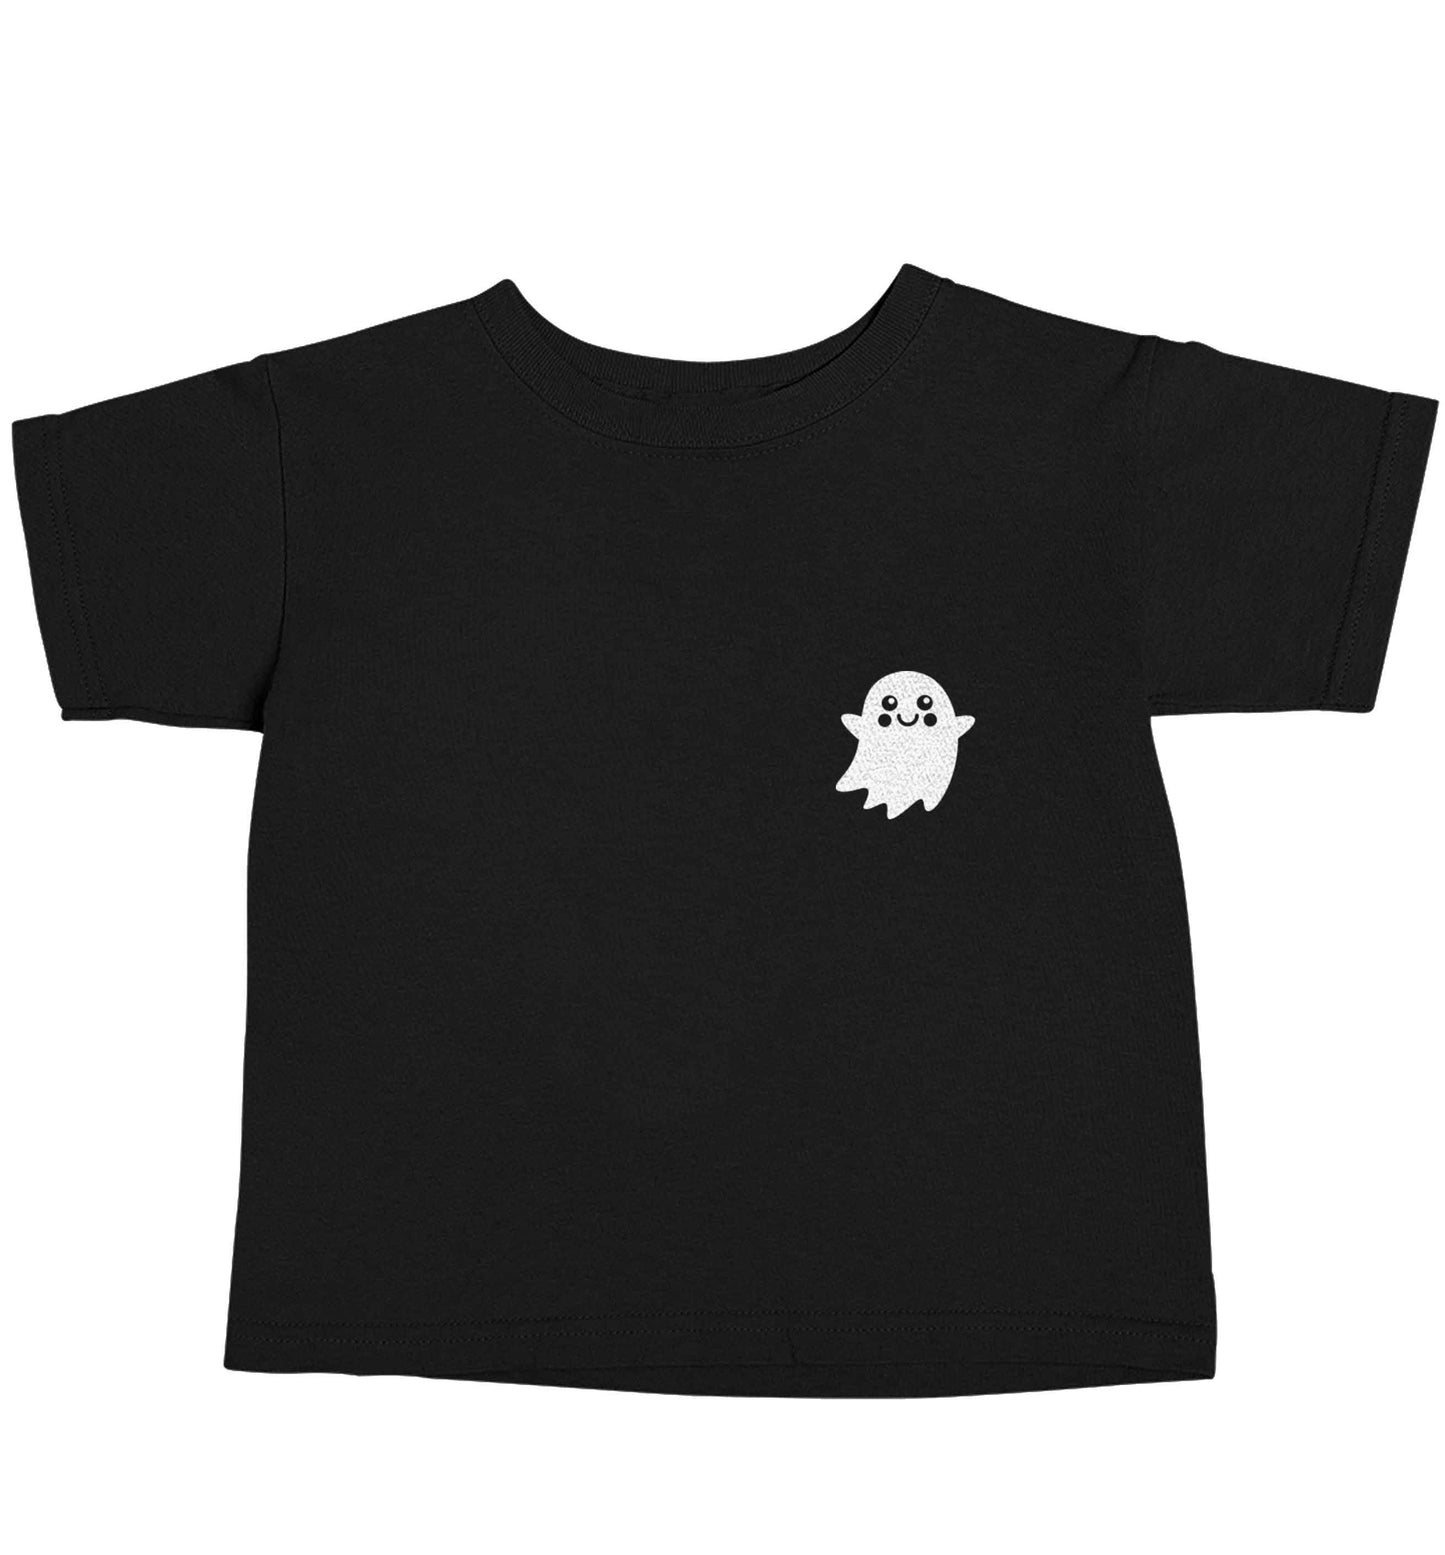 Pocket ghost Black baby toddler Tshirt 2 years